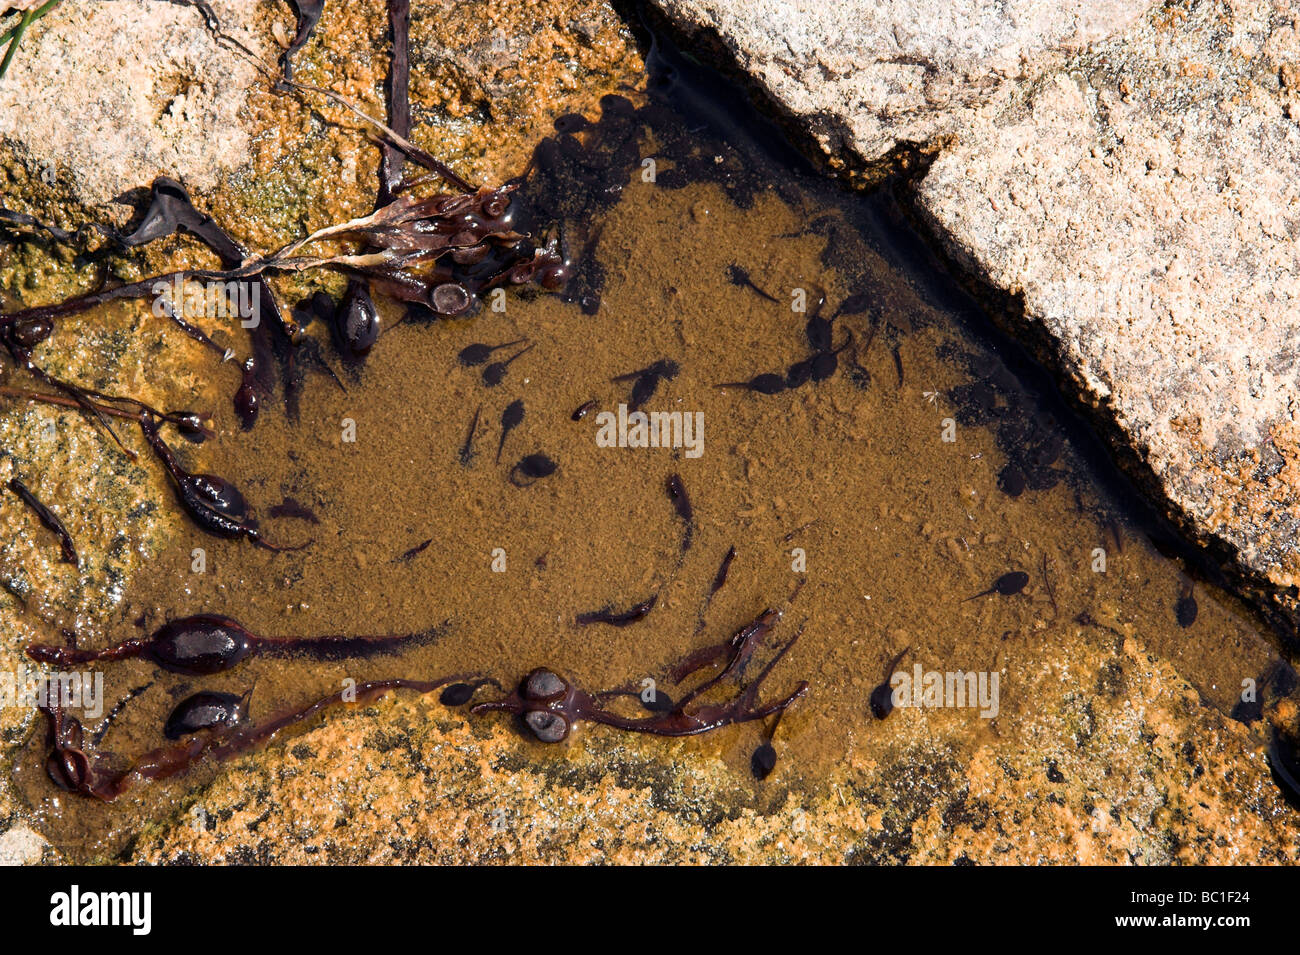 Tadpoles in a rock pool, amphibian, amphibians Stock Photo